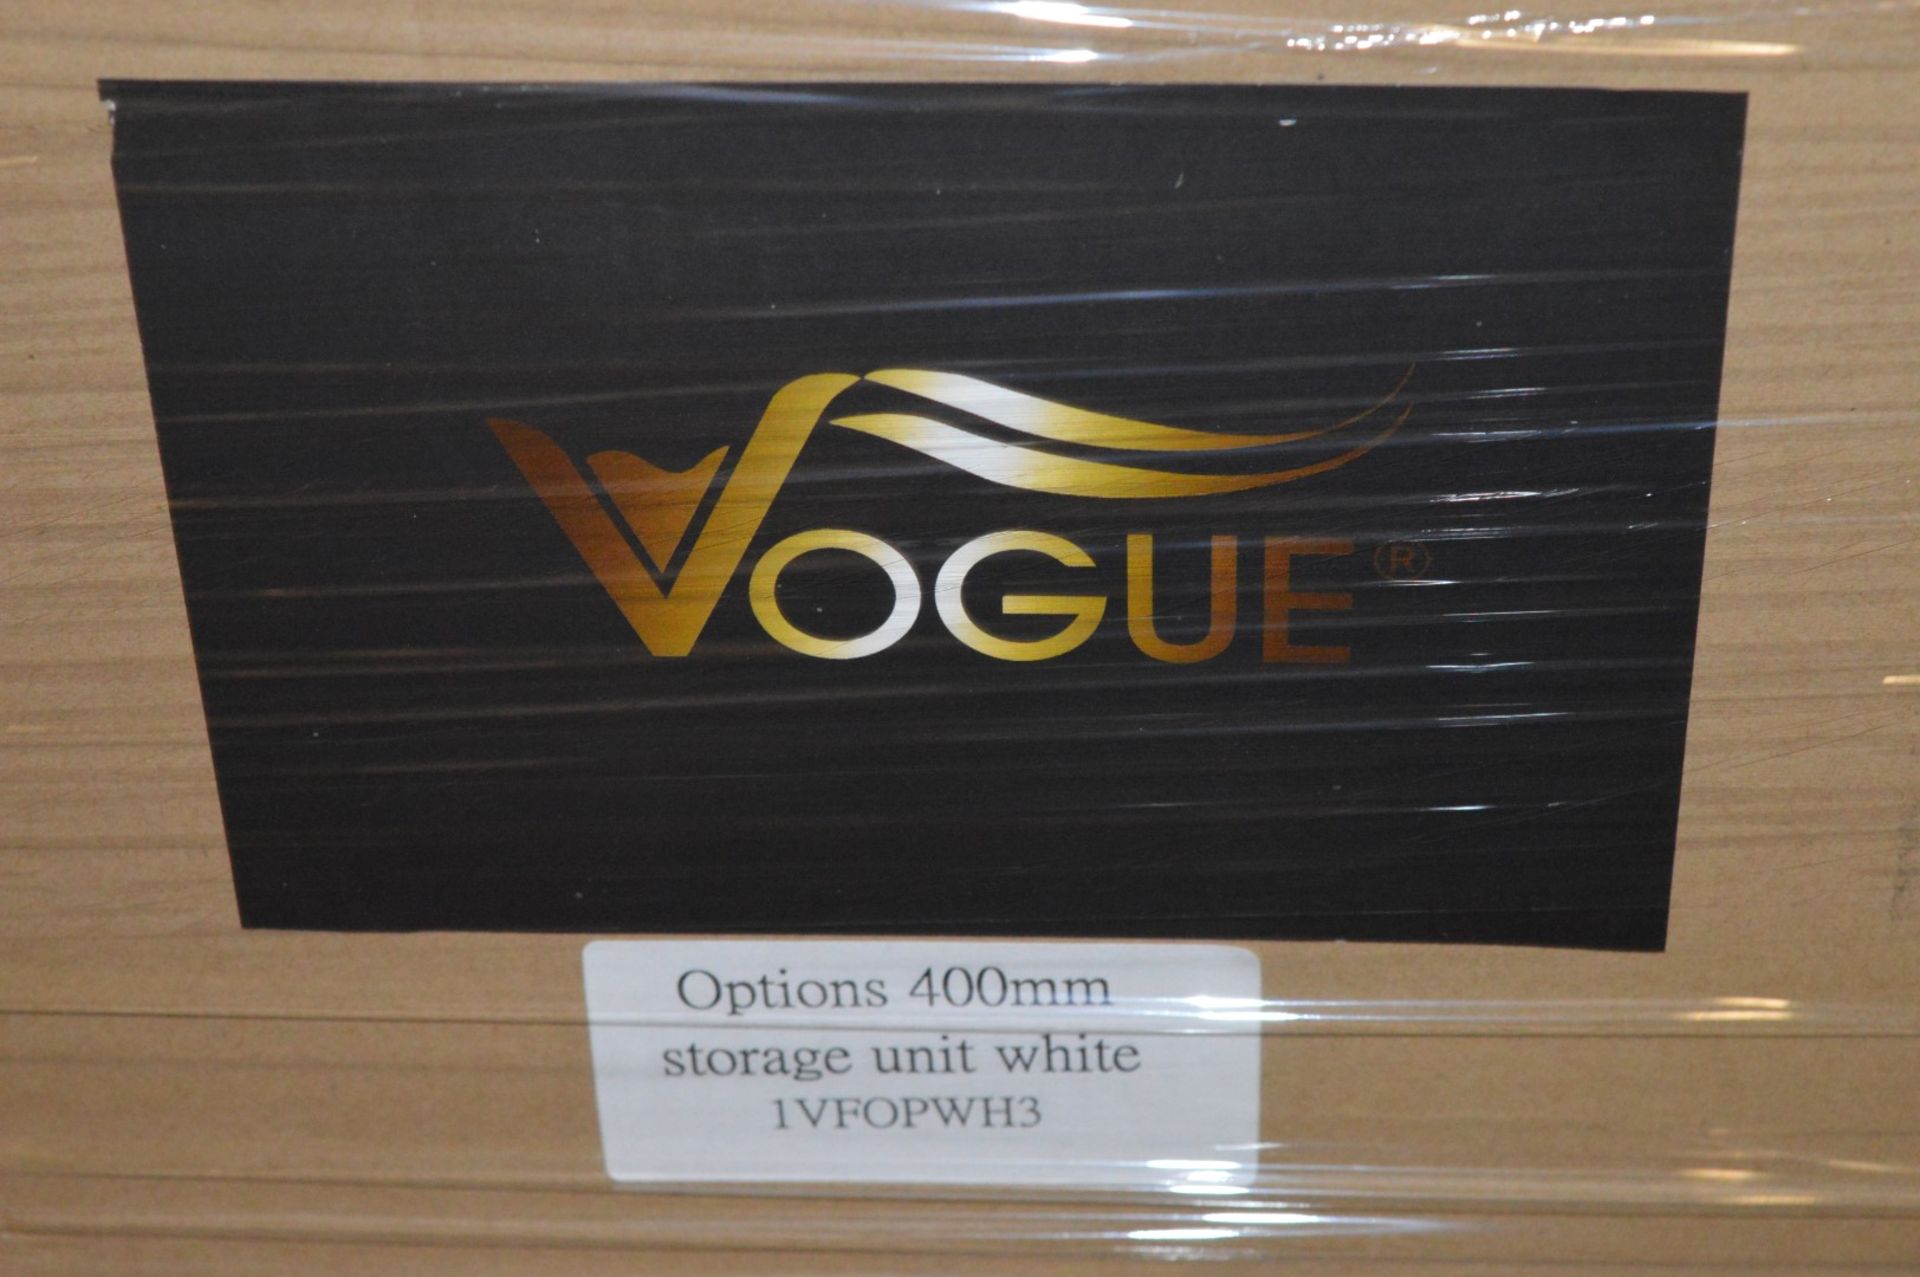 1 x Vogue Options White Gloss Bathroom 400mm Storage Cabinet - Vinyl Wrap Coating for Splash Water - Image 2 of 3